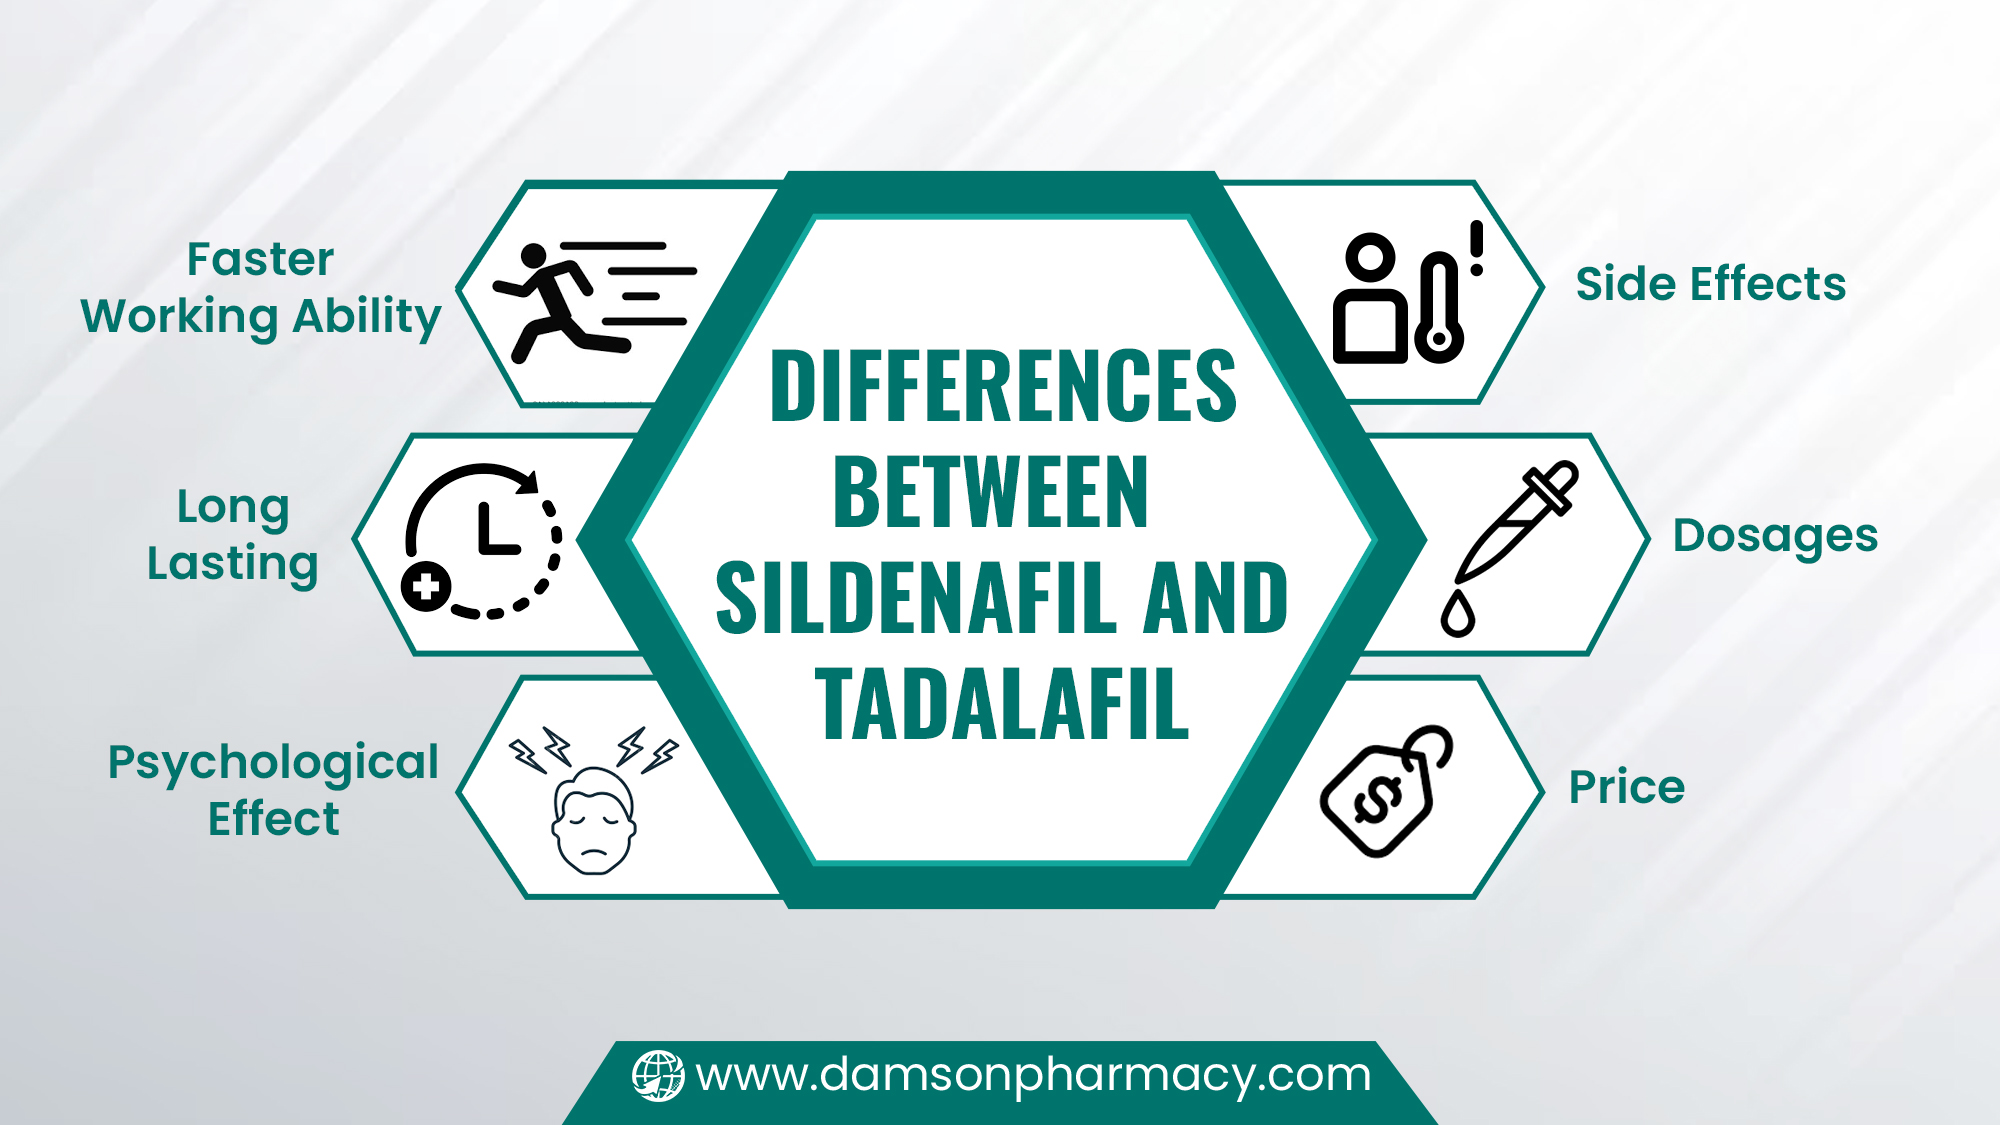 Differences between Sildenafil and Tadalafil